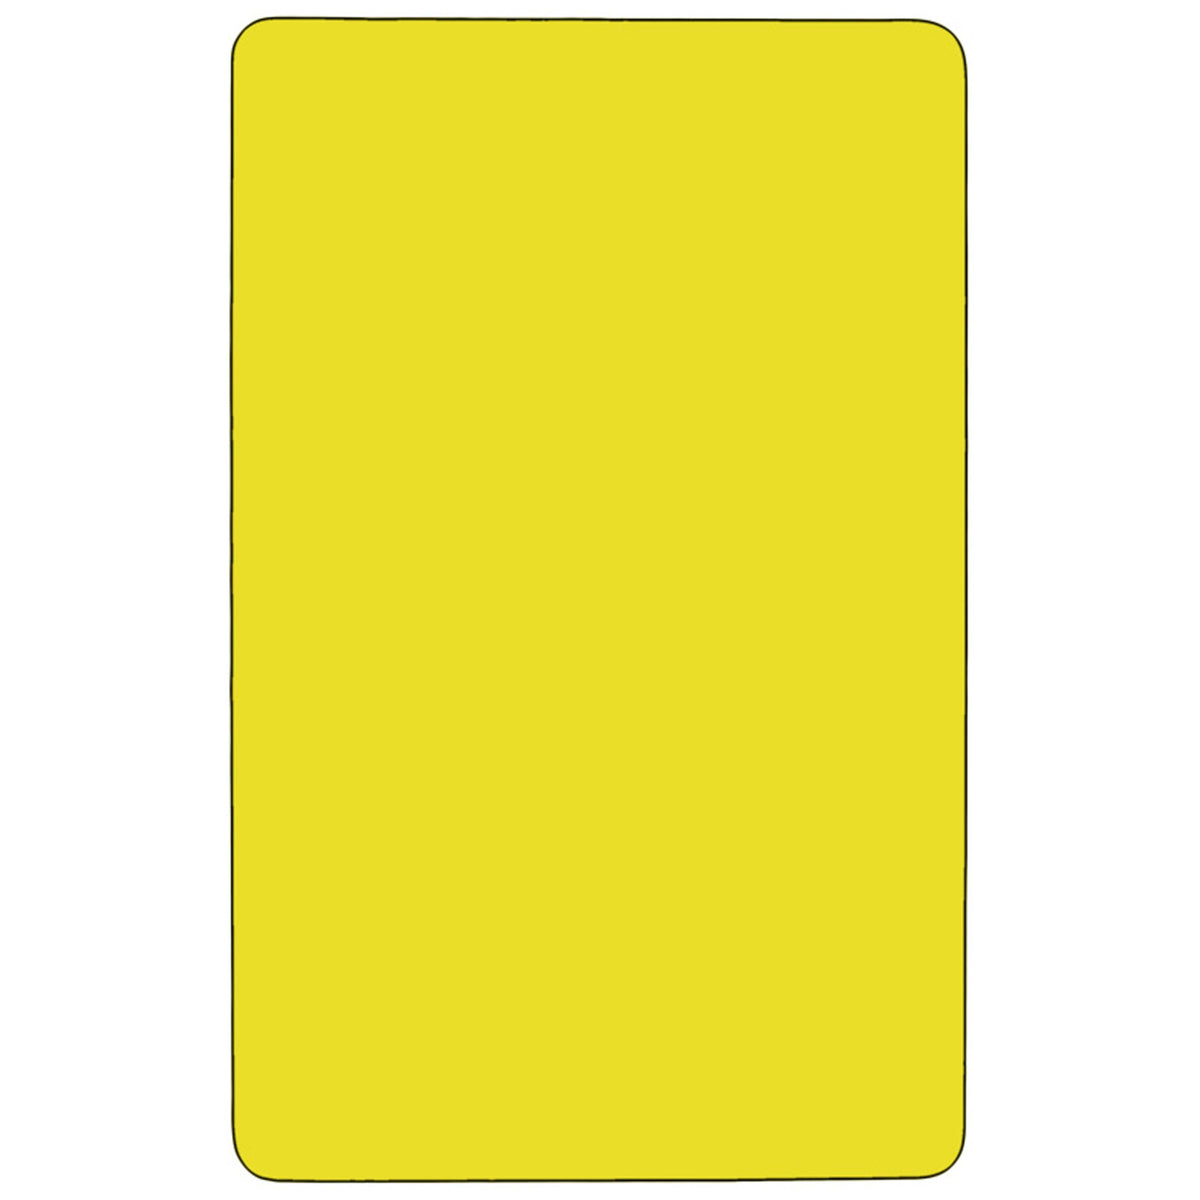 Yellow |#| 24inchW x 48inchL Rectangular Yellow HP Laminate Activity Table - Adjustable Legs